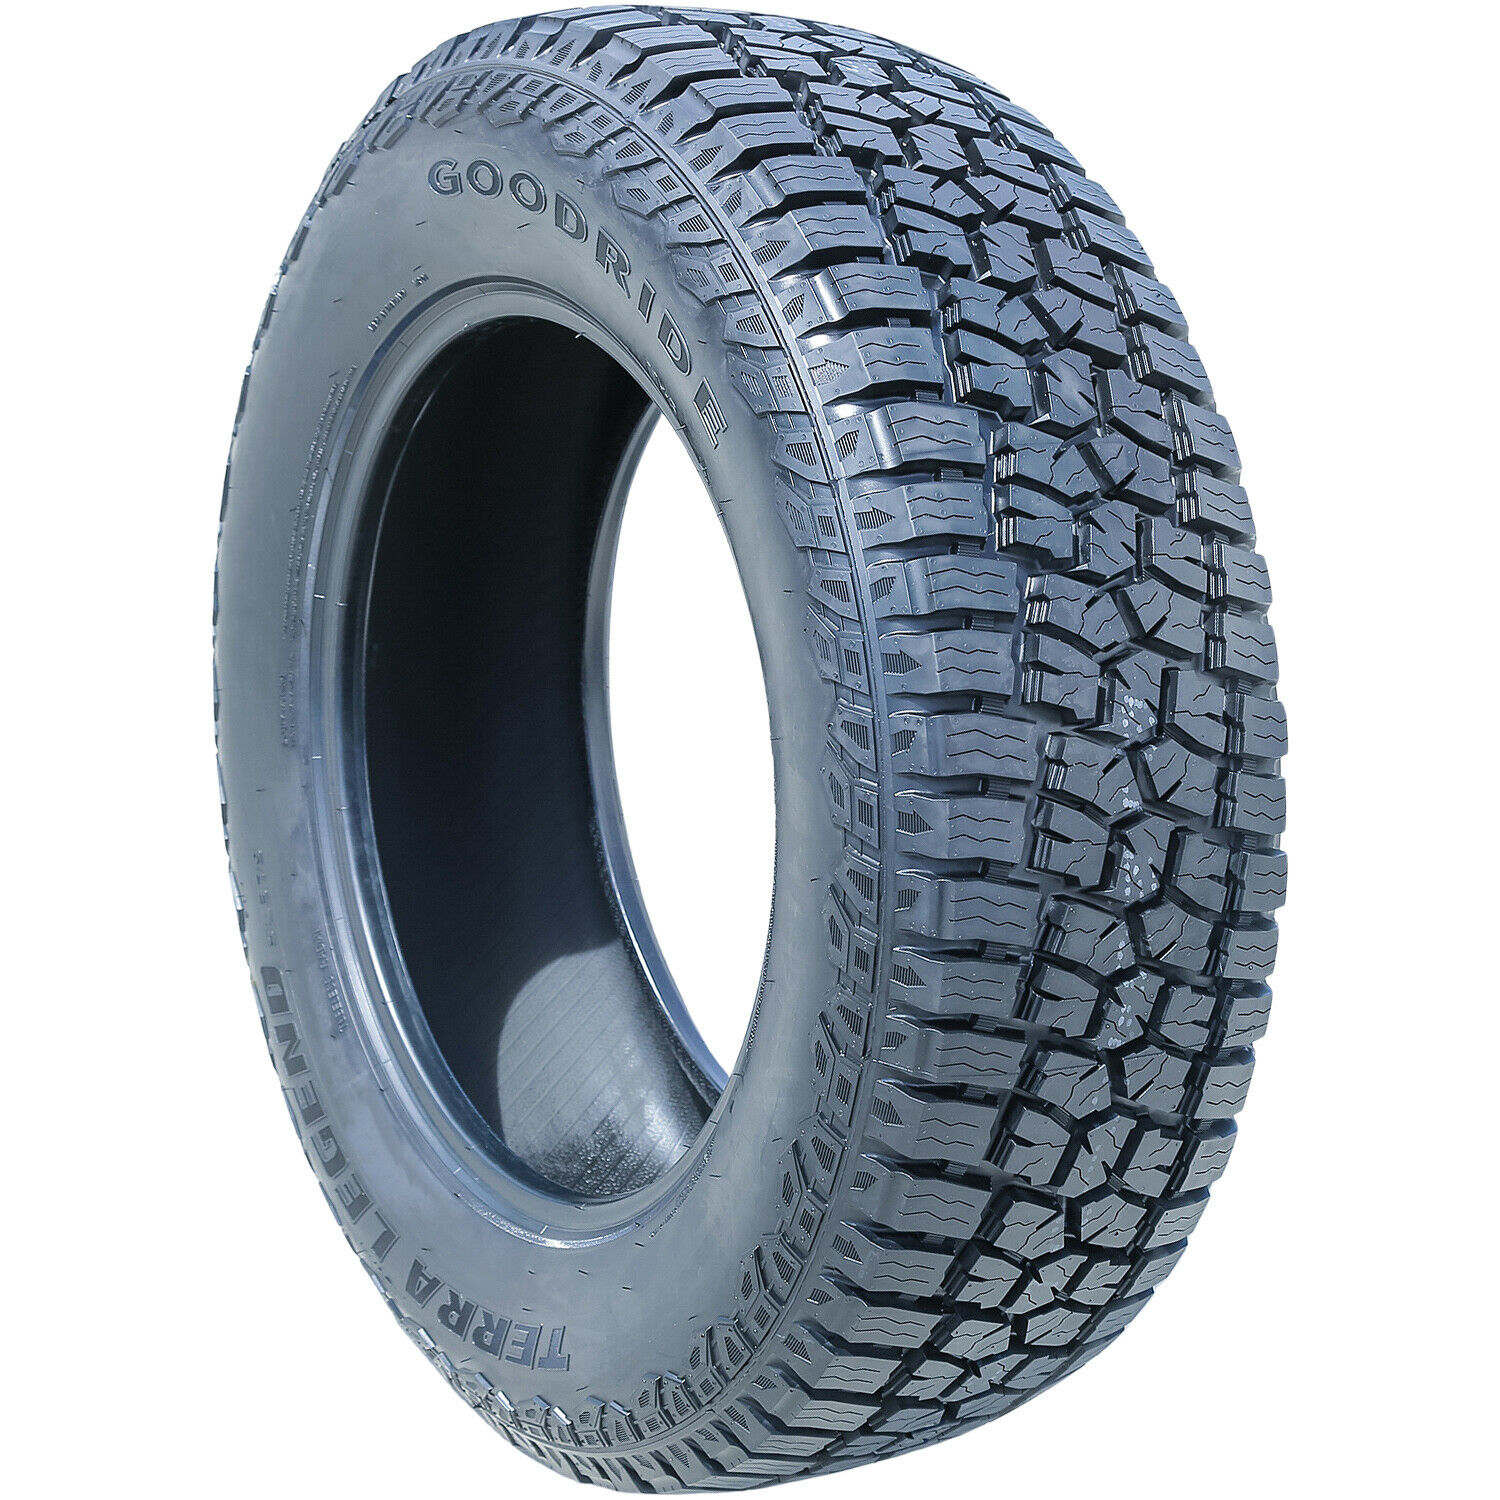 Tire Goodride Terra Legend SL379 LT 315/70R17 Load E 10 Ply A/T All Terrain